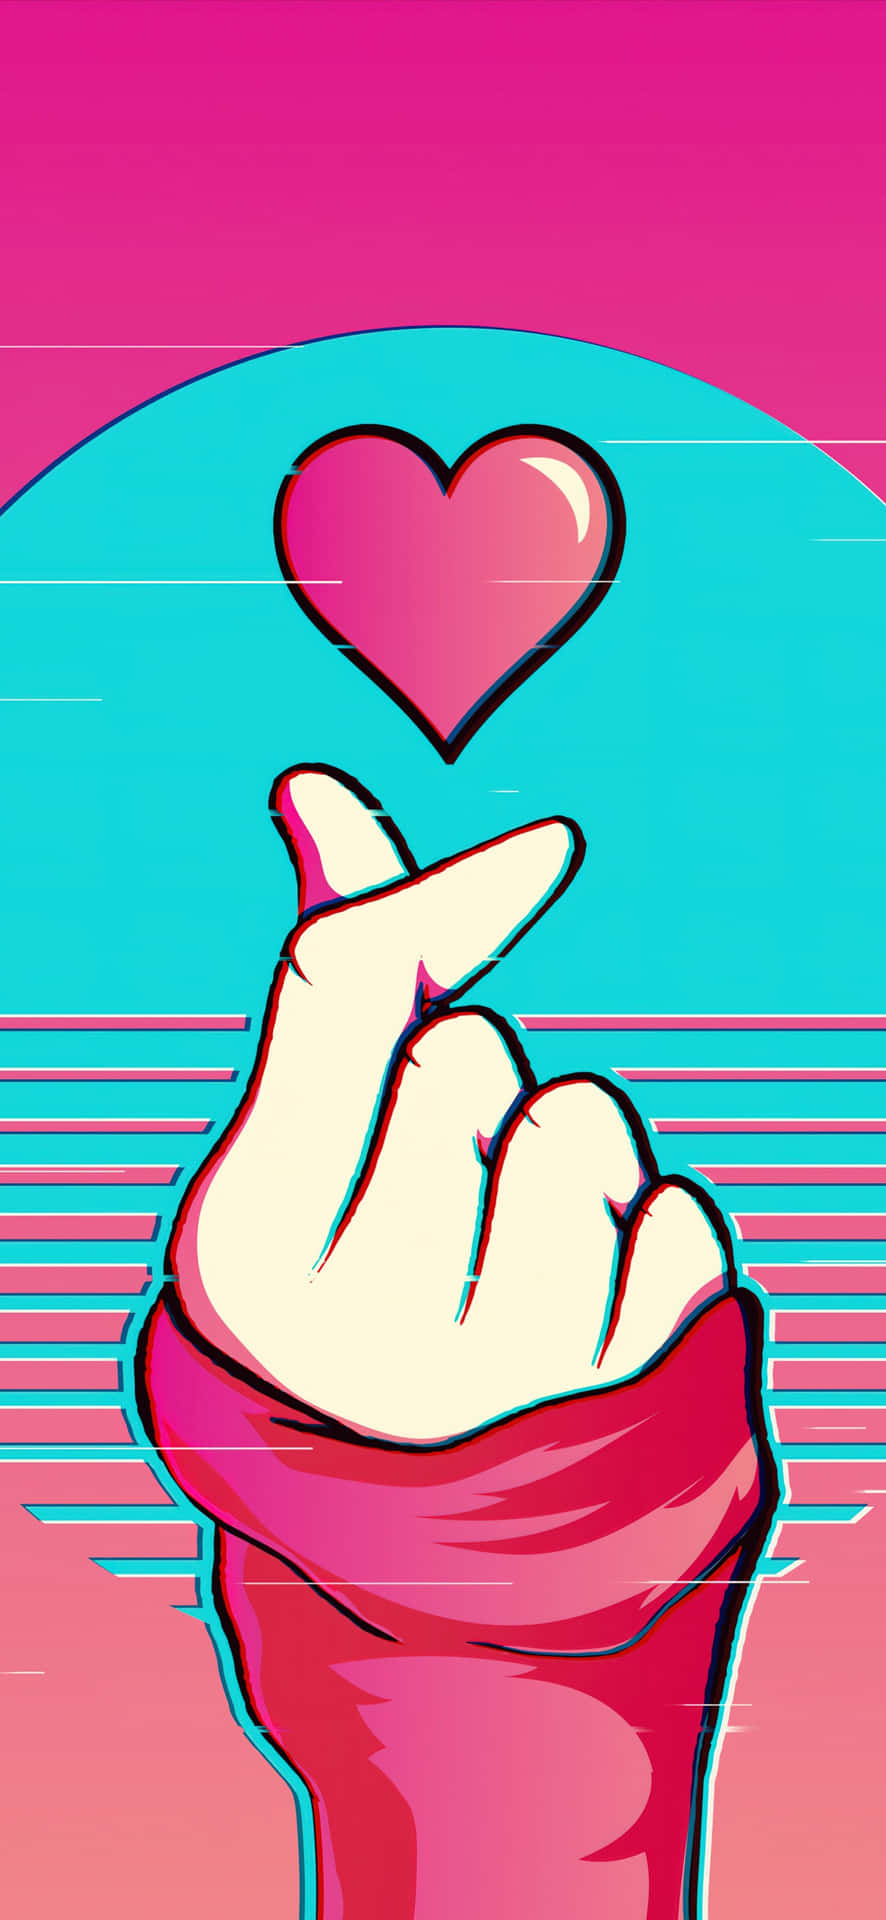 Korean Heart Gesture Illustration Wallpaper